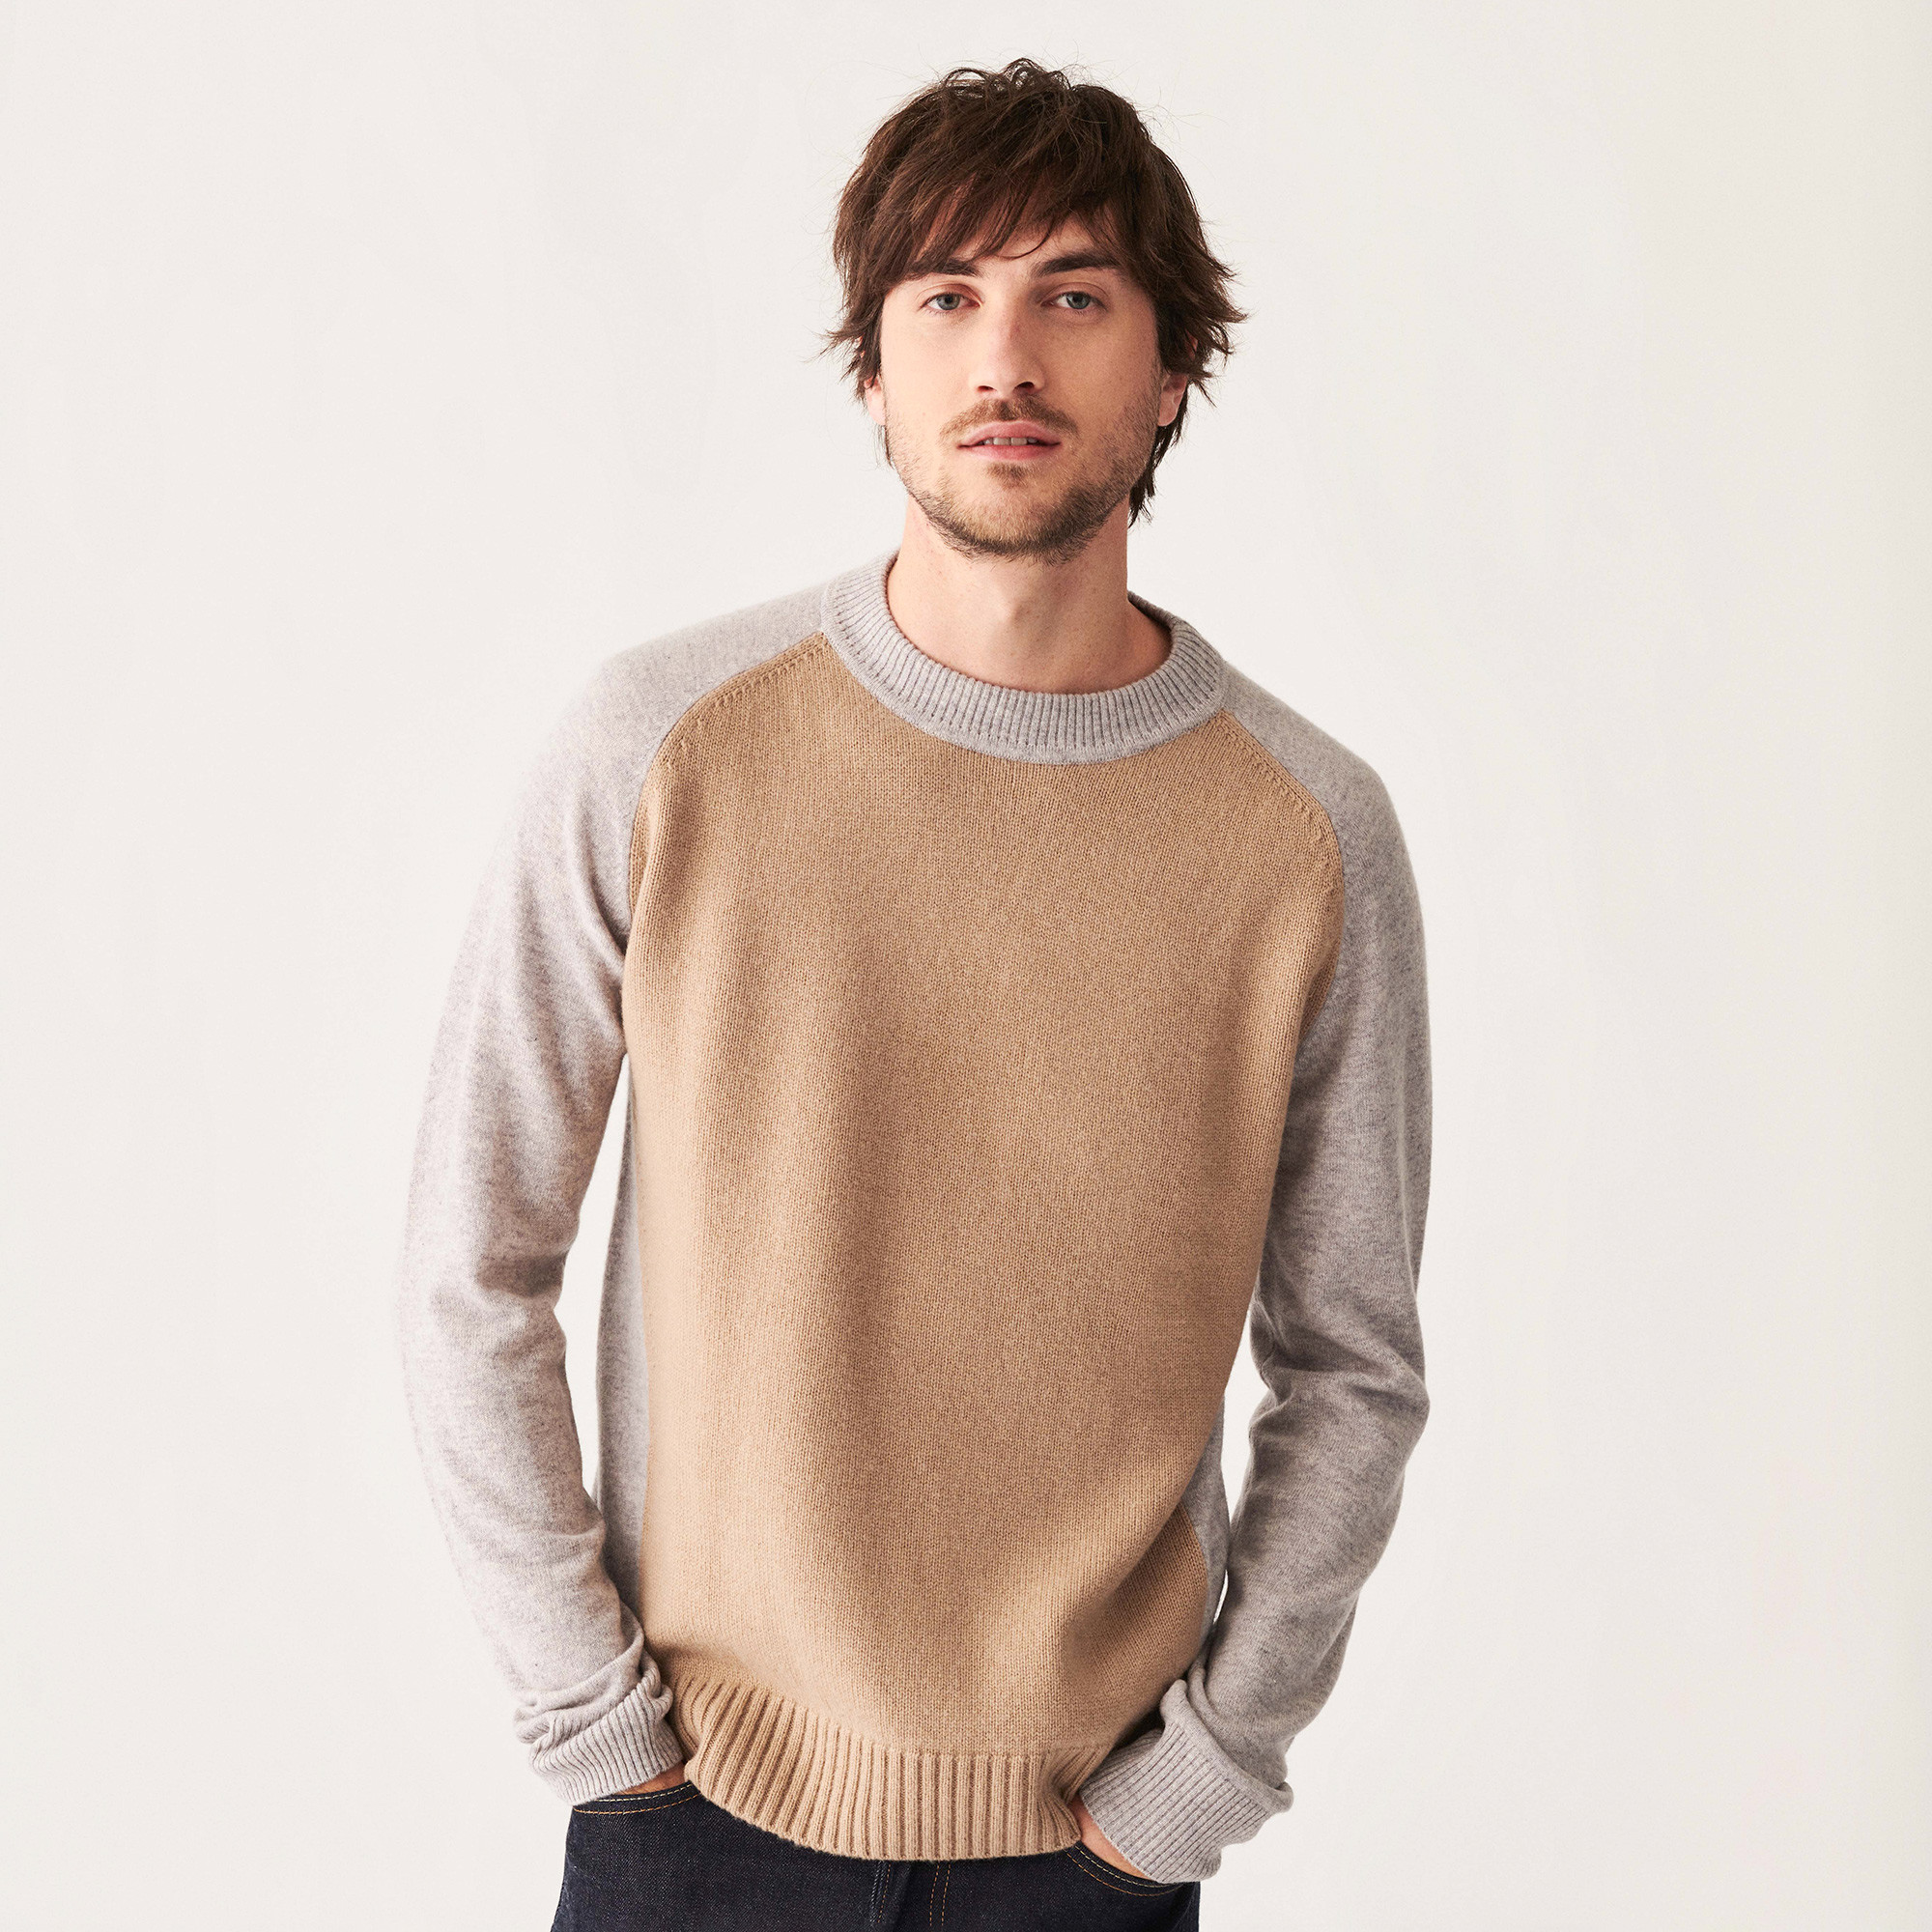 https://us.montagut.com/25588/two-tone-cashmere-sweater-with-raglan-sleeves-amalfi.jpg